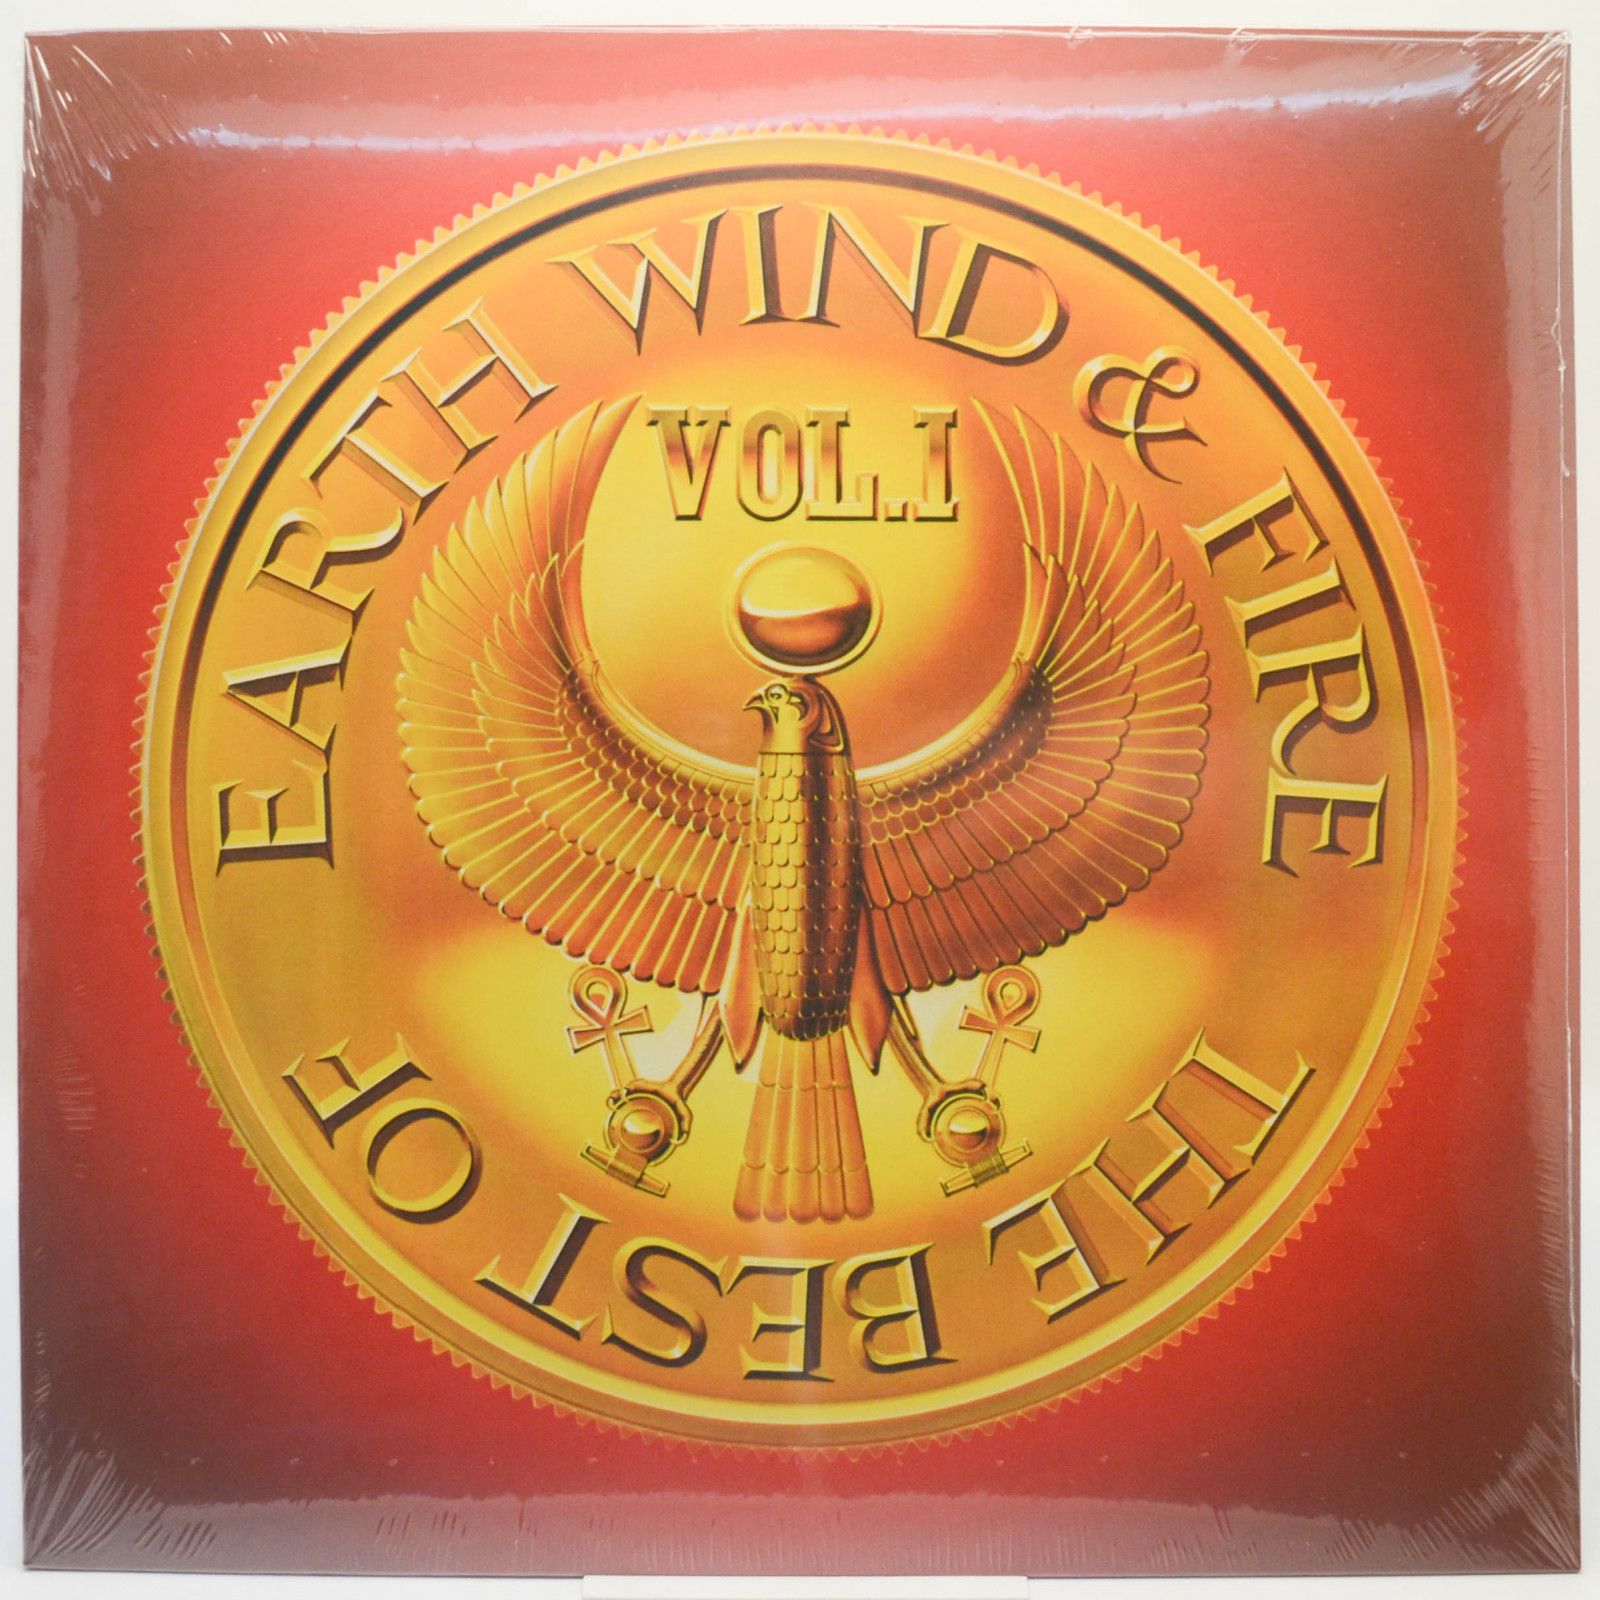 Earth, Wind & Fire — The Best Of Earth, Wind & Fire Vol. 1, 1978